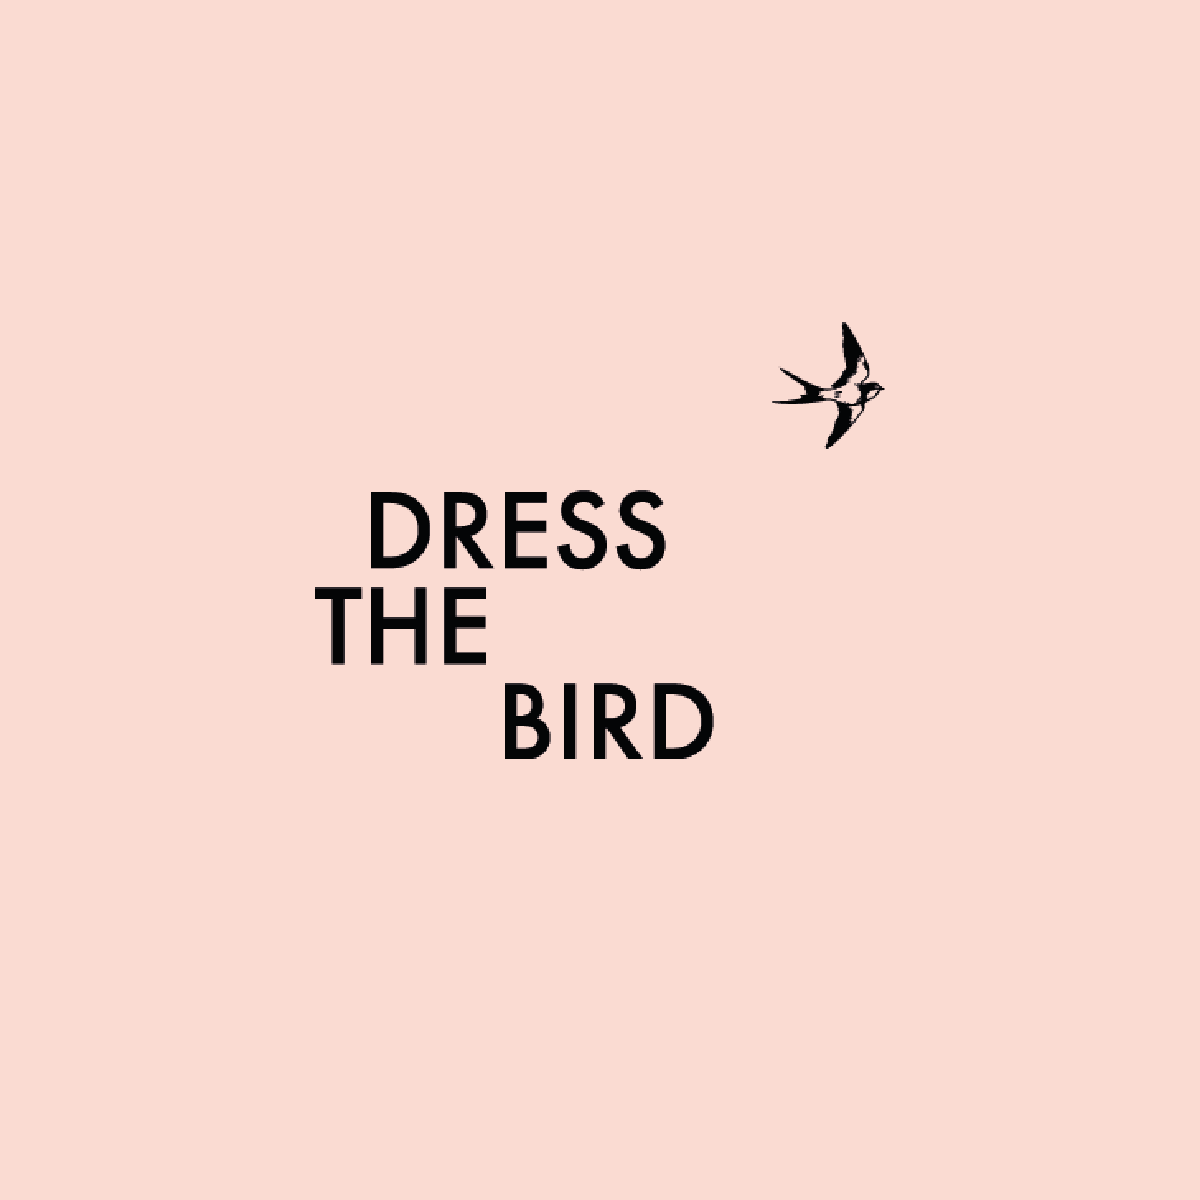 Dress the bird ApS